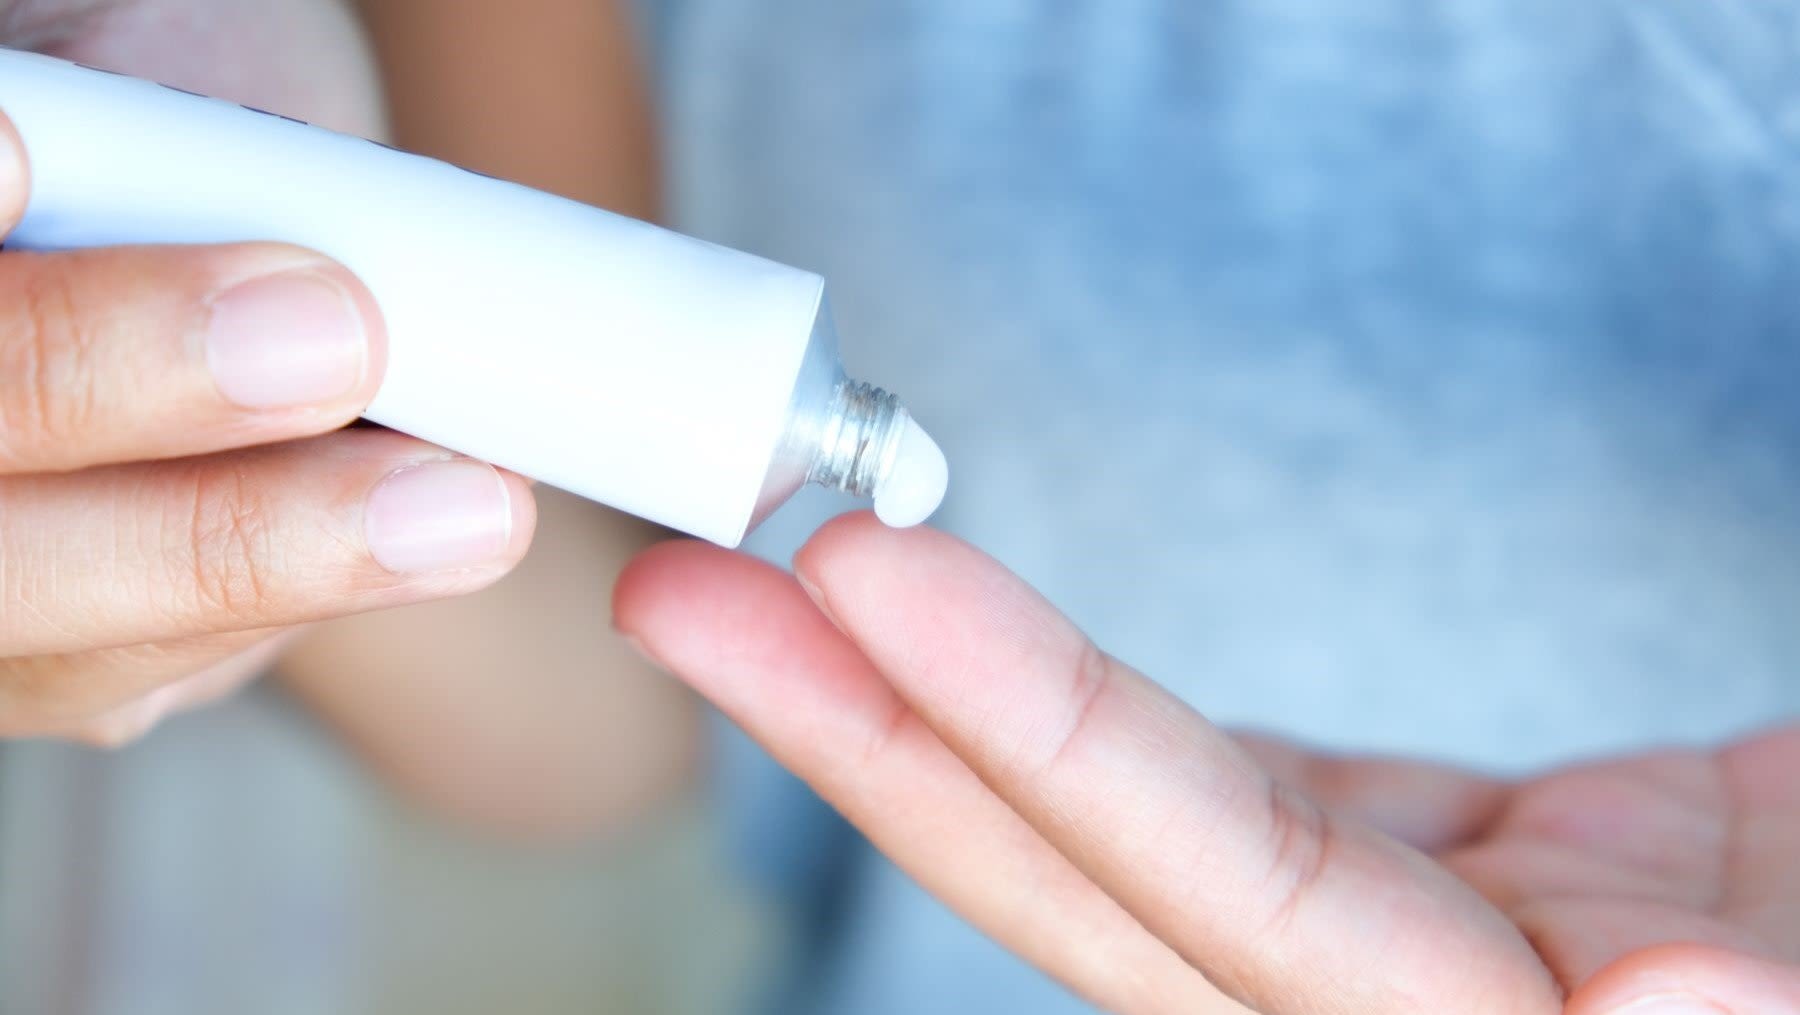 Study finds 1.5 percent ruxolitinib cream safe, effective for teens with eczema